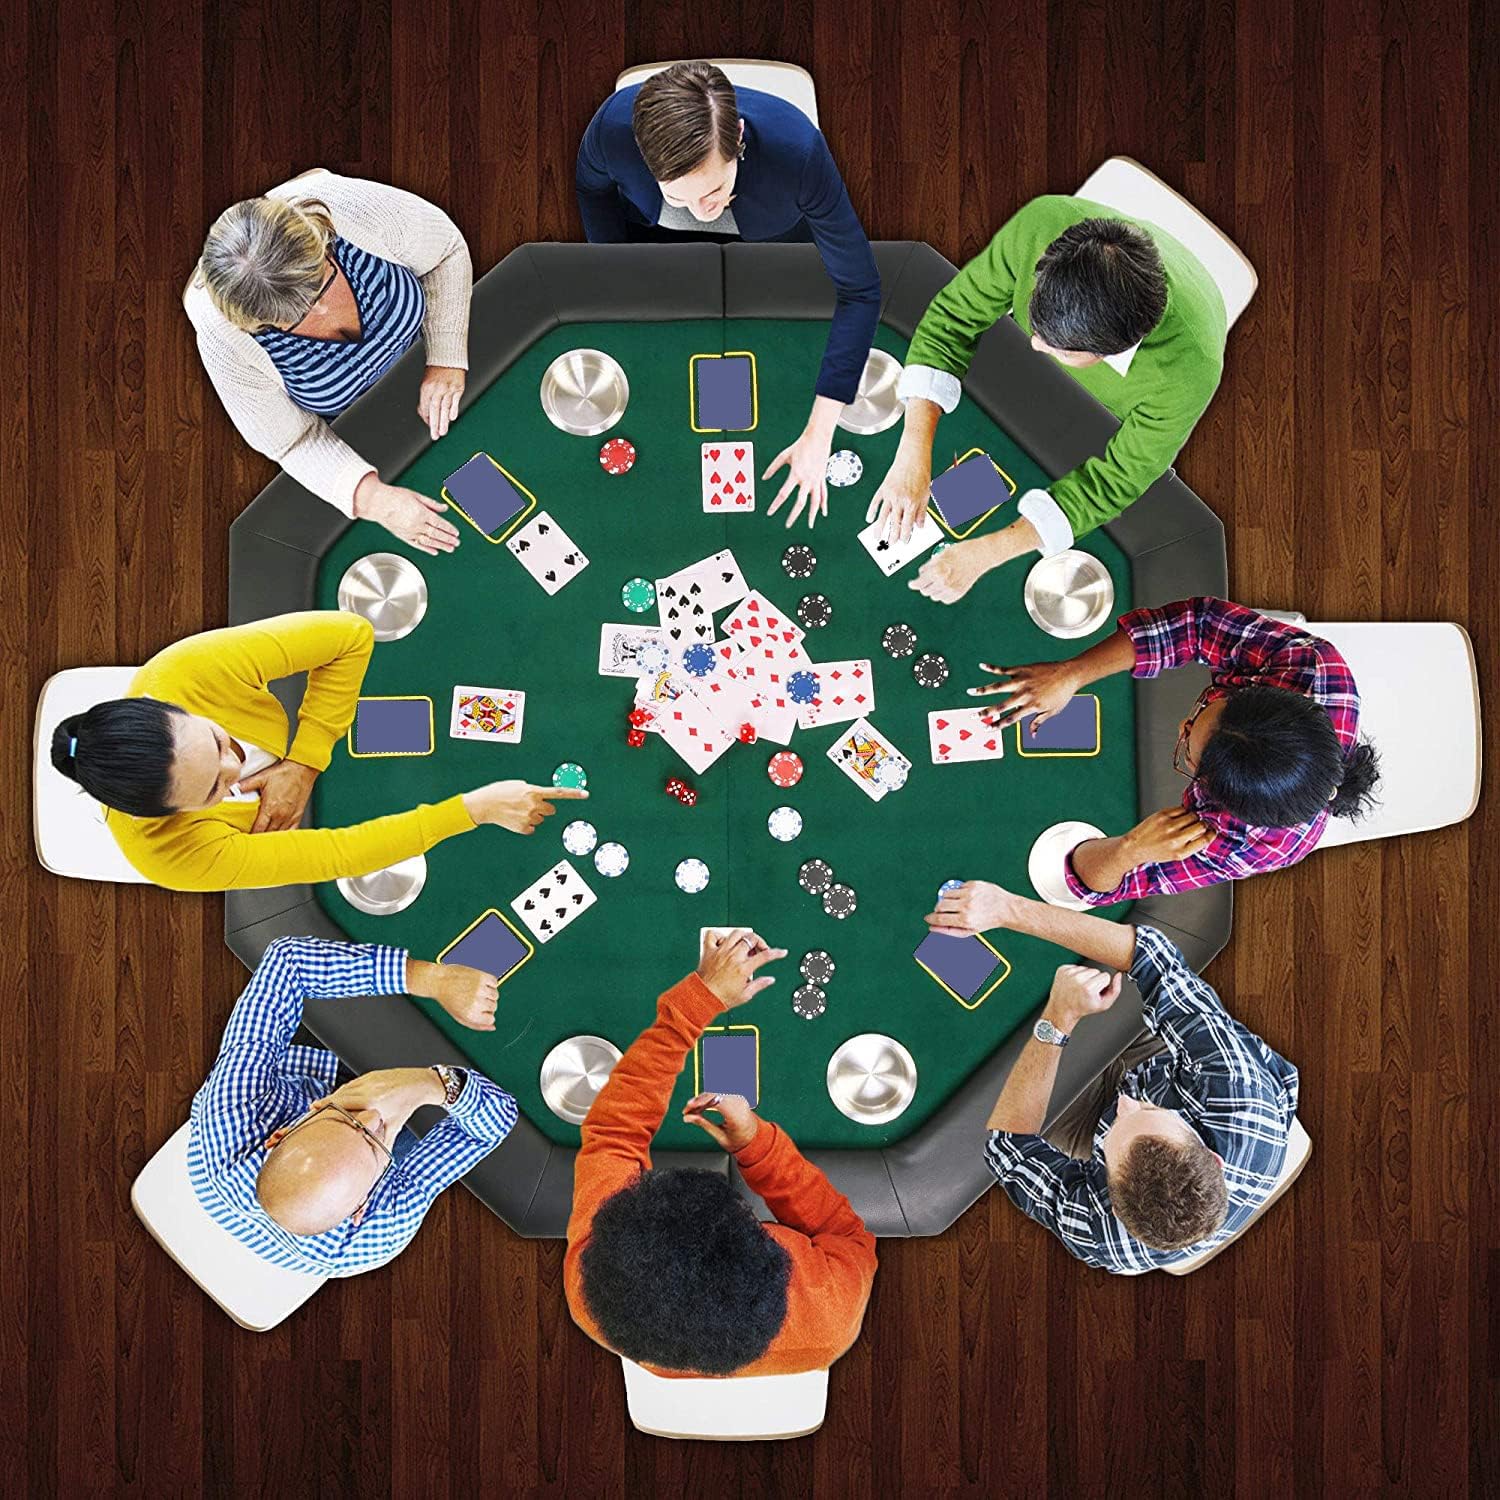 LUCKYERMORE 48" Octagon Folding Poker Table 8 Player Casino Texas Poker Mat, Stainless Steel Cup Holder